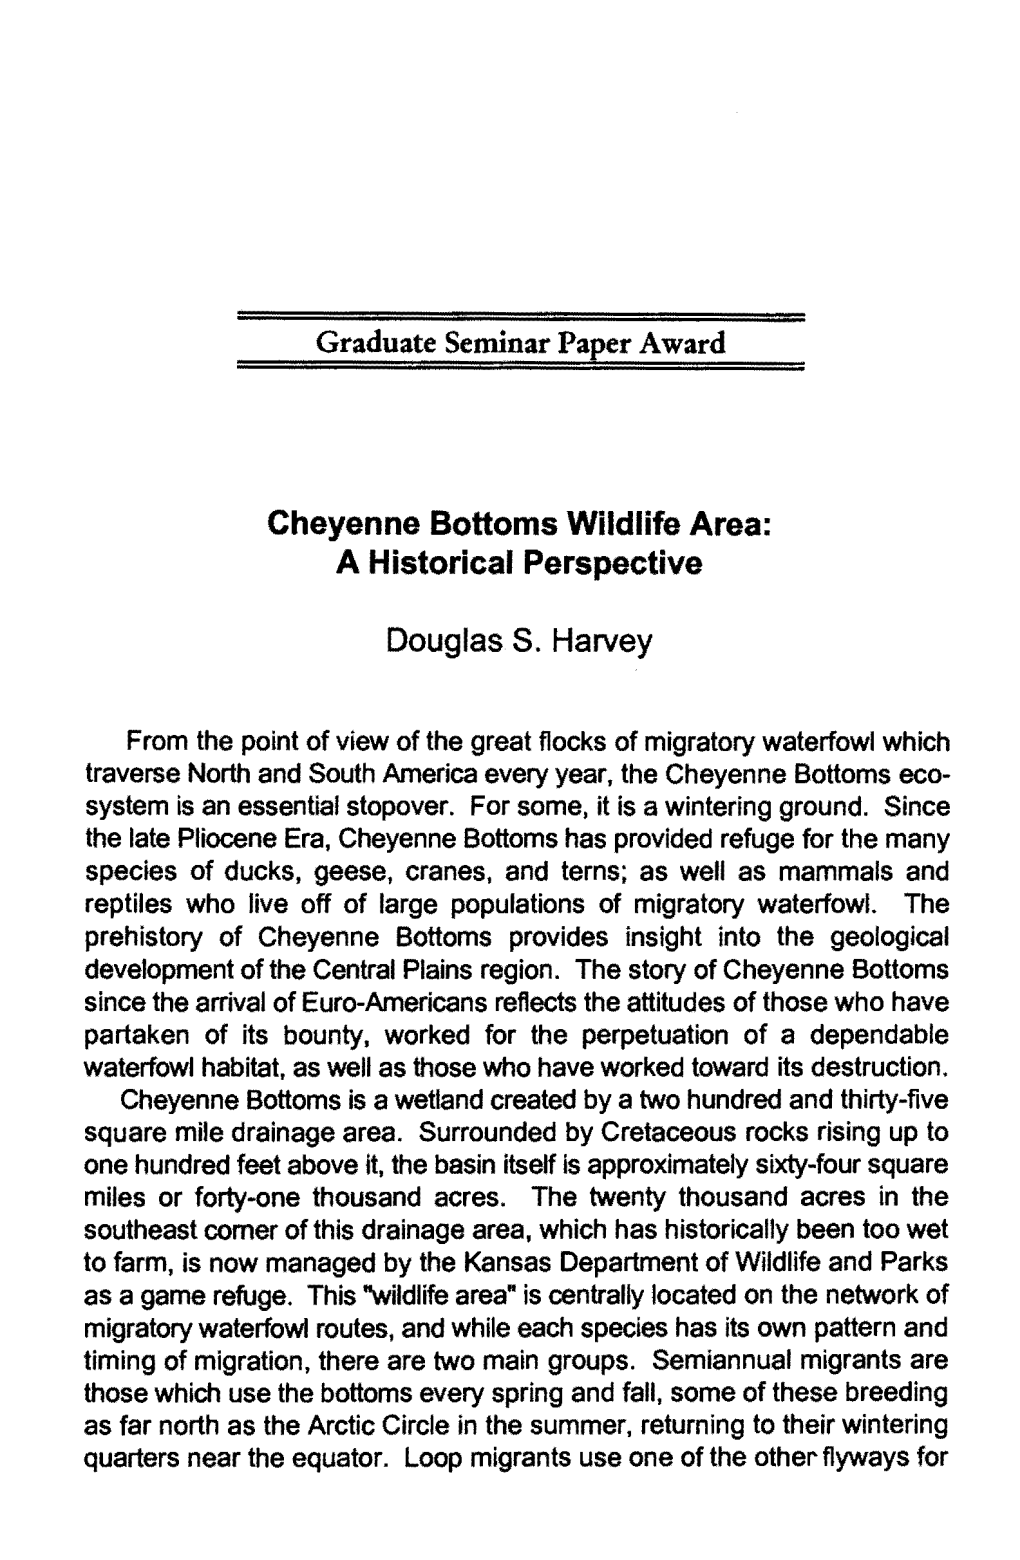 Graduate Seminar Paper Award Cheyenne Bottoms Wildlife Area